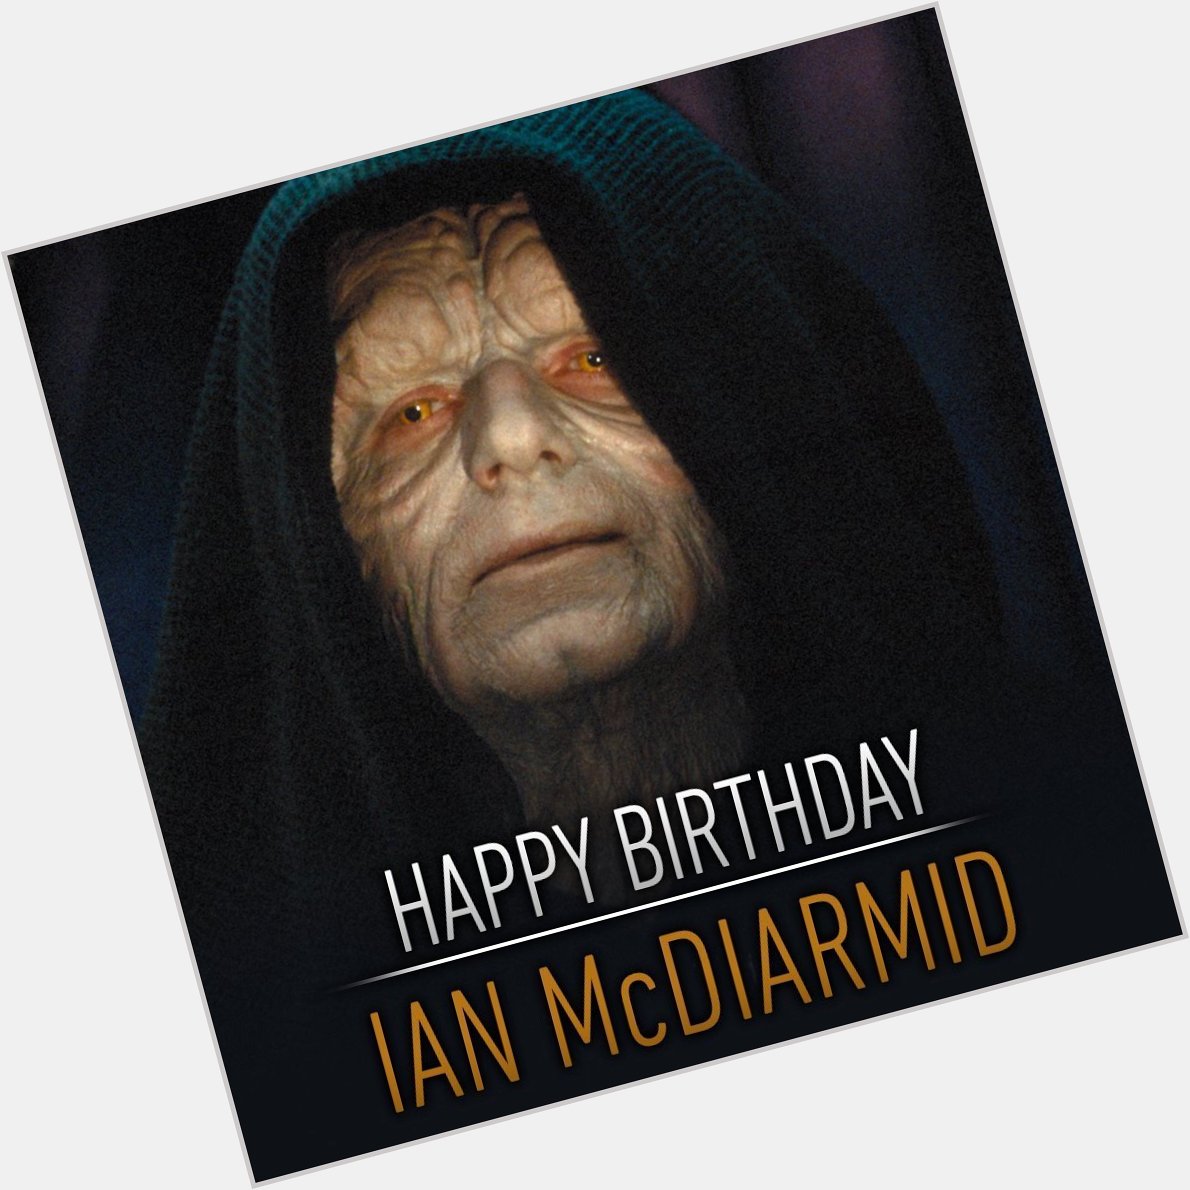 Happy birthday, Ian McDiarmid 